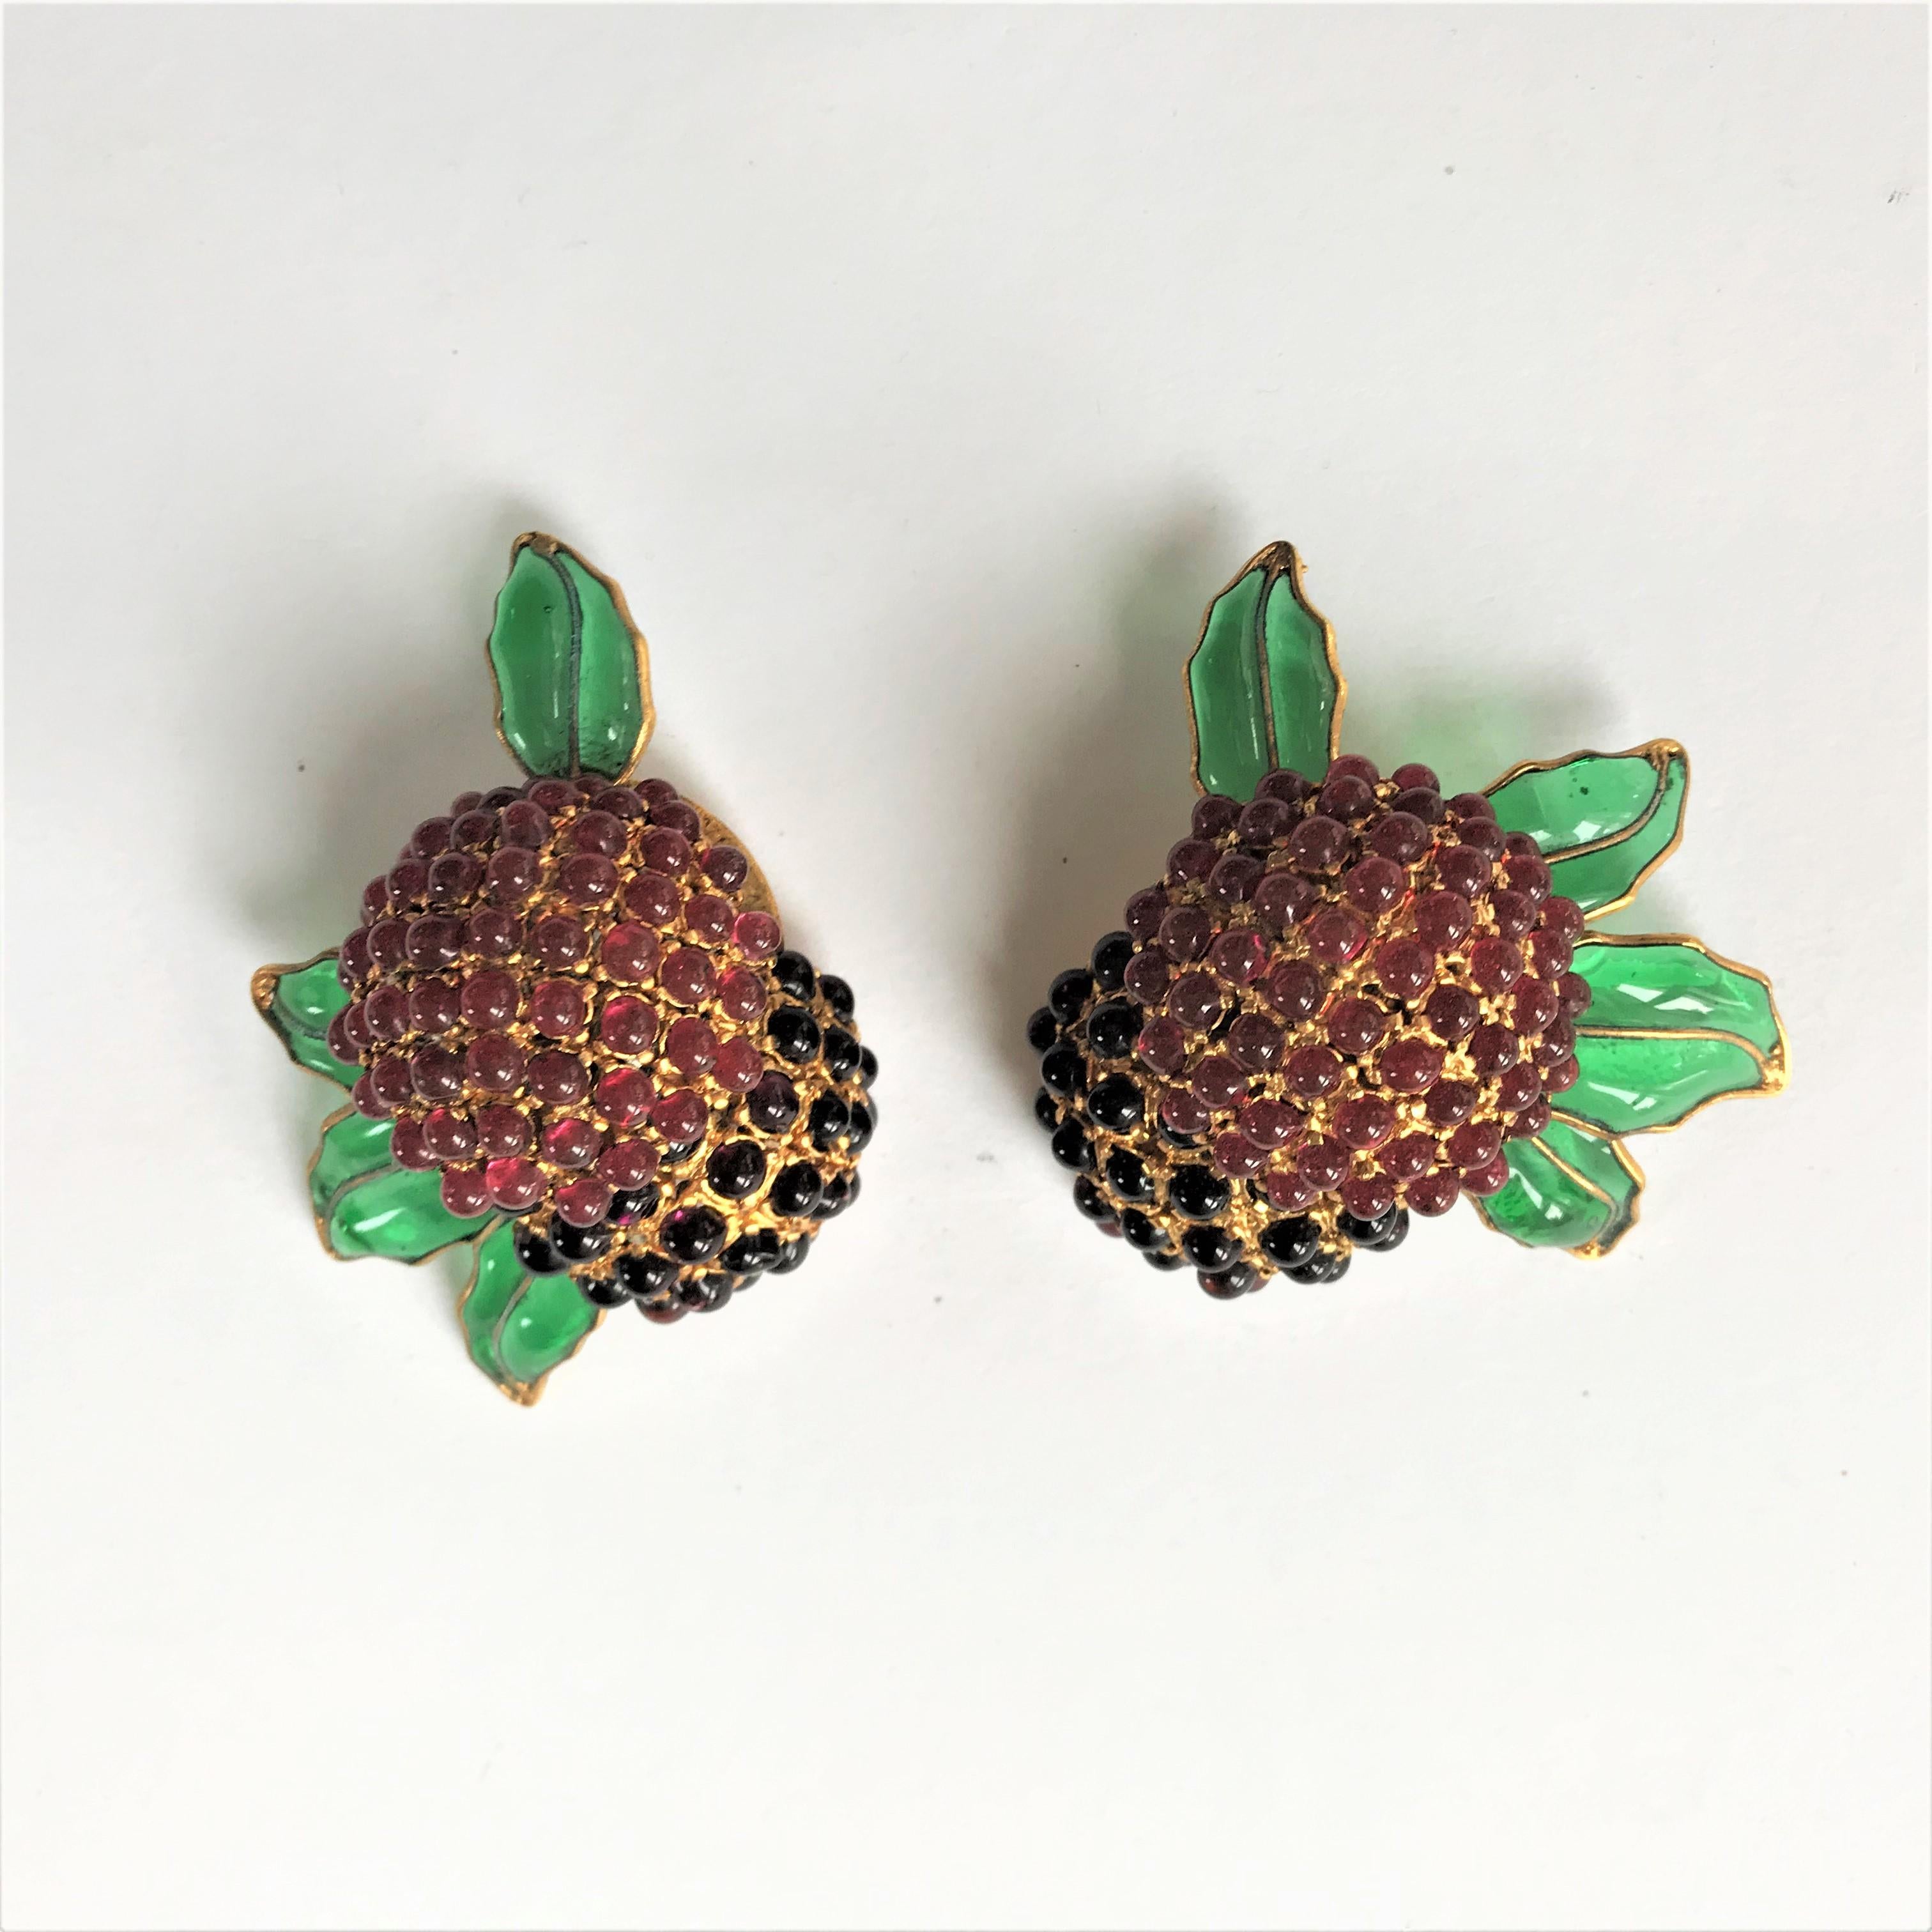 Chanel ear clips in the shape of 2 blackberries Maison Gripoix 1970/80s g. plate 3